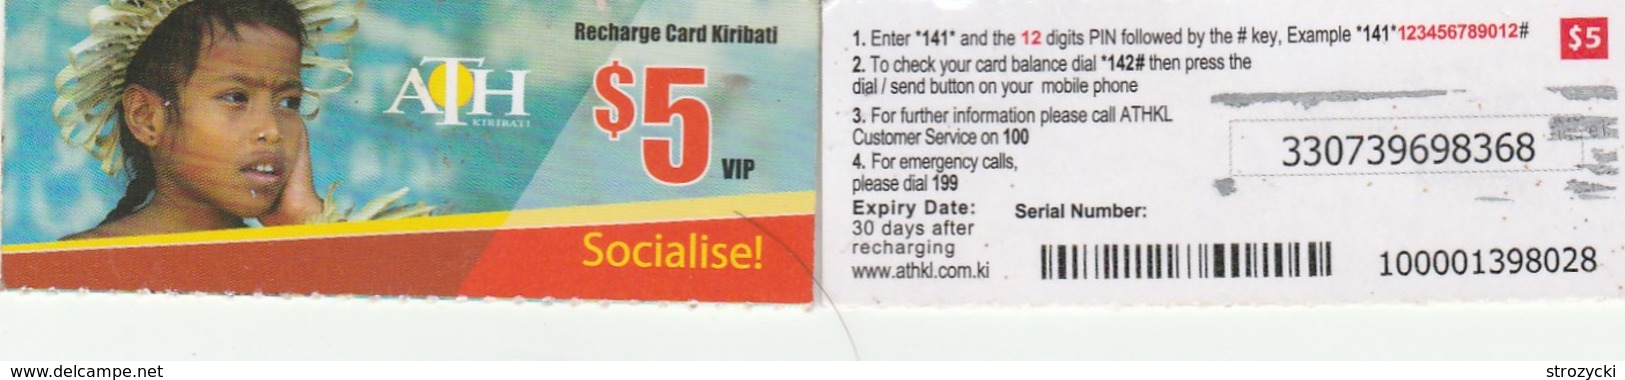 Kiribati - ATH - Boy - Mini Card - Kiribati